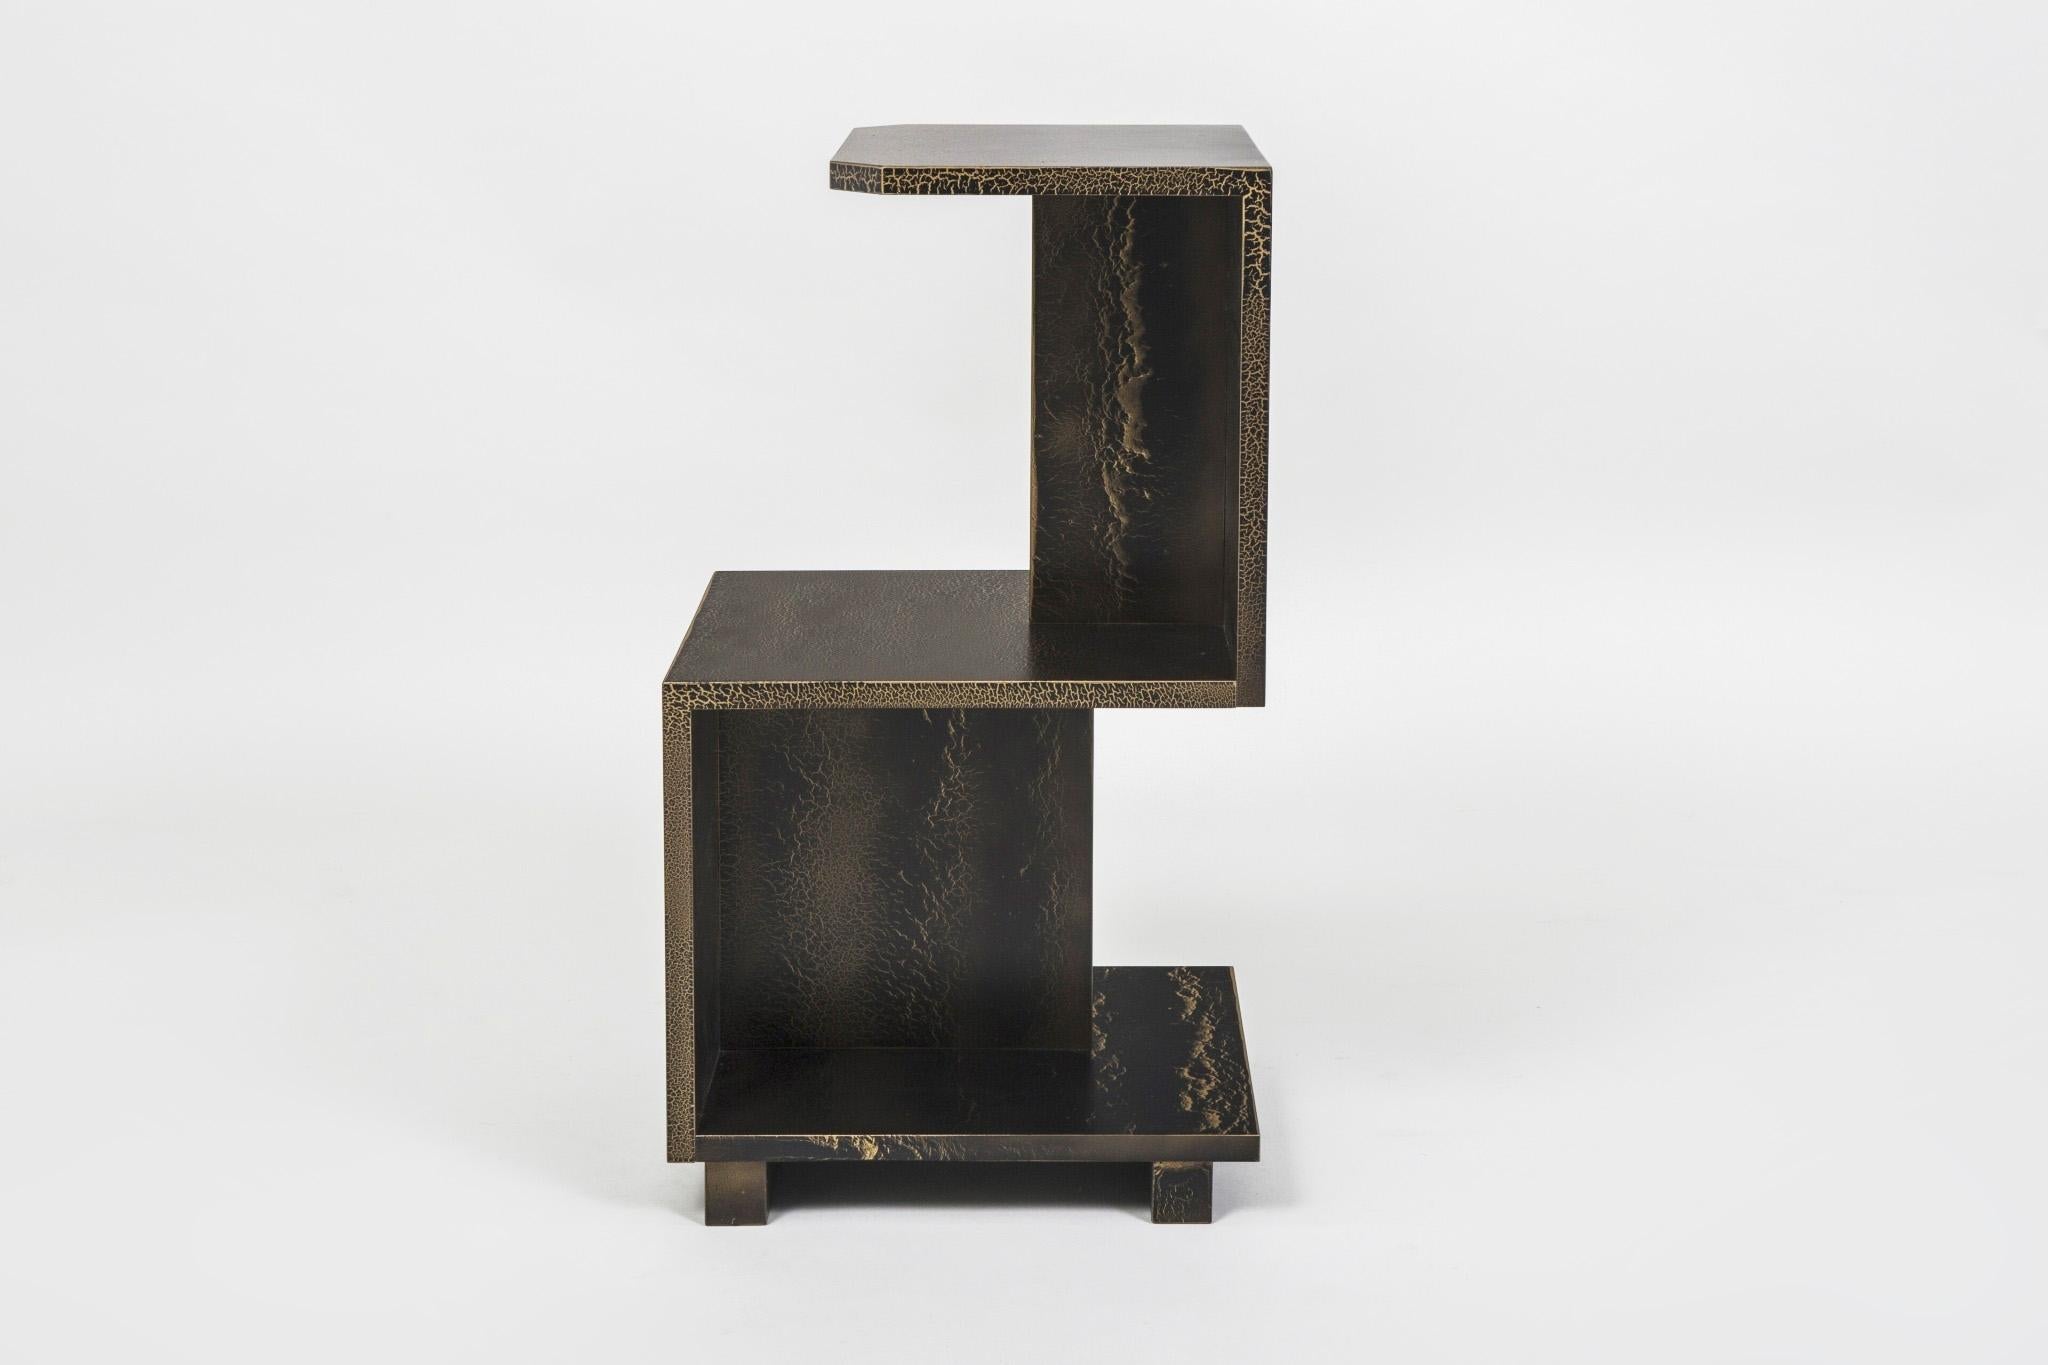 French Art Deco Designer Table, Replica of Louis Majorelle Design In Good Condition For Sale In Horomerice, CZ